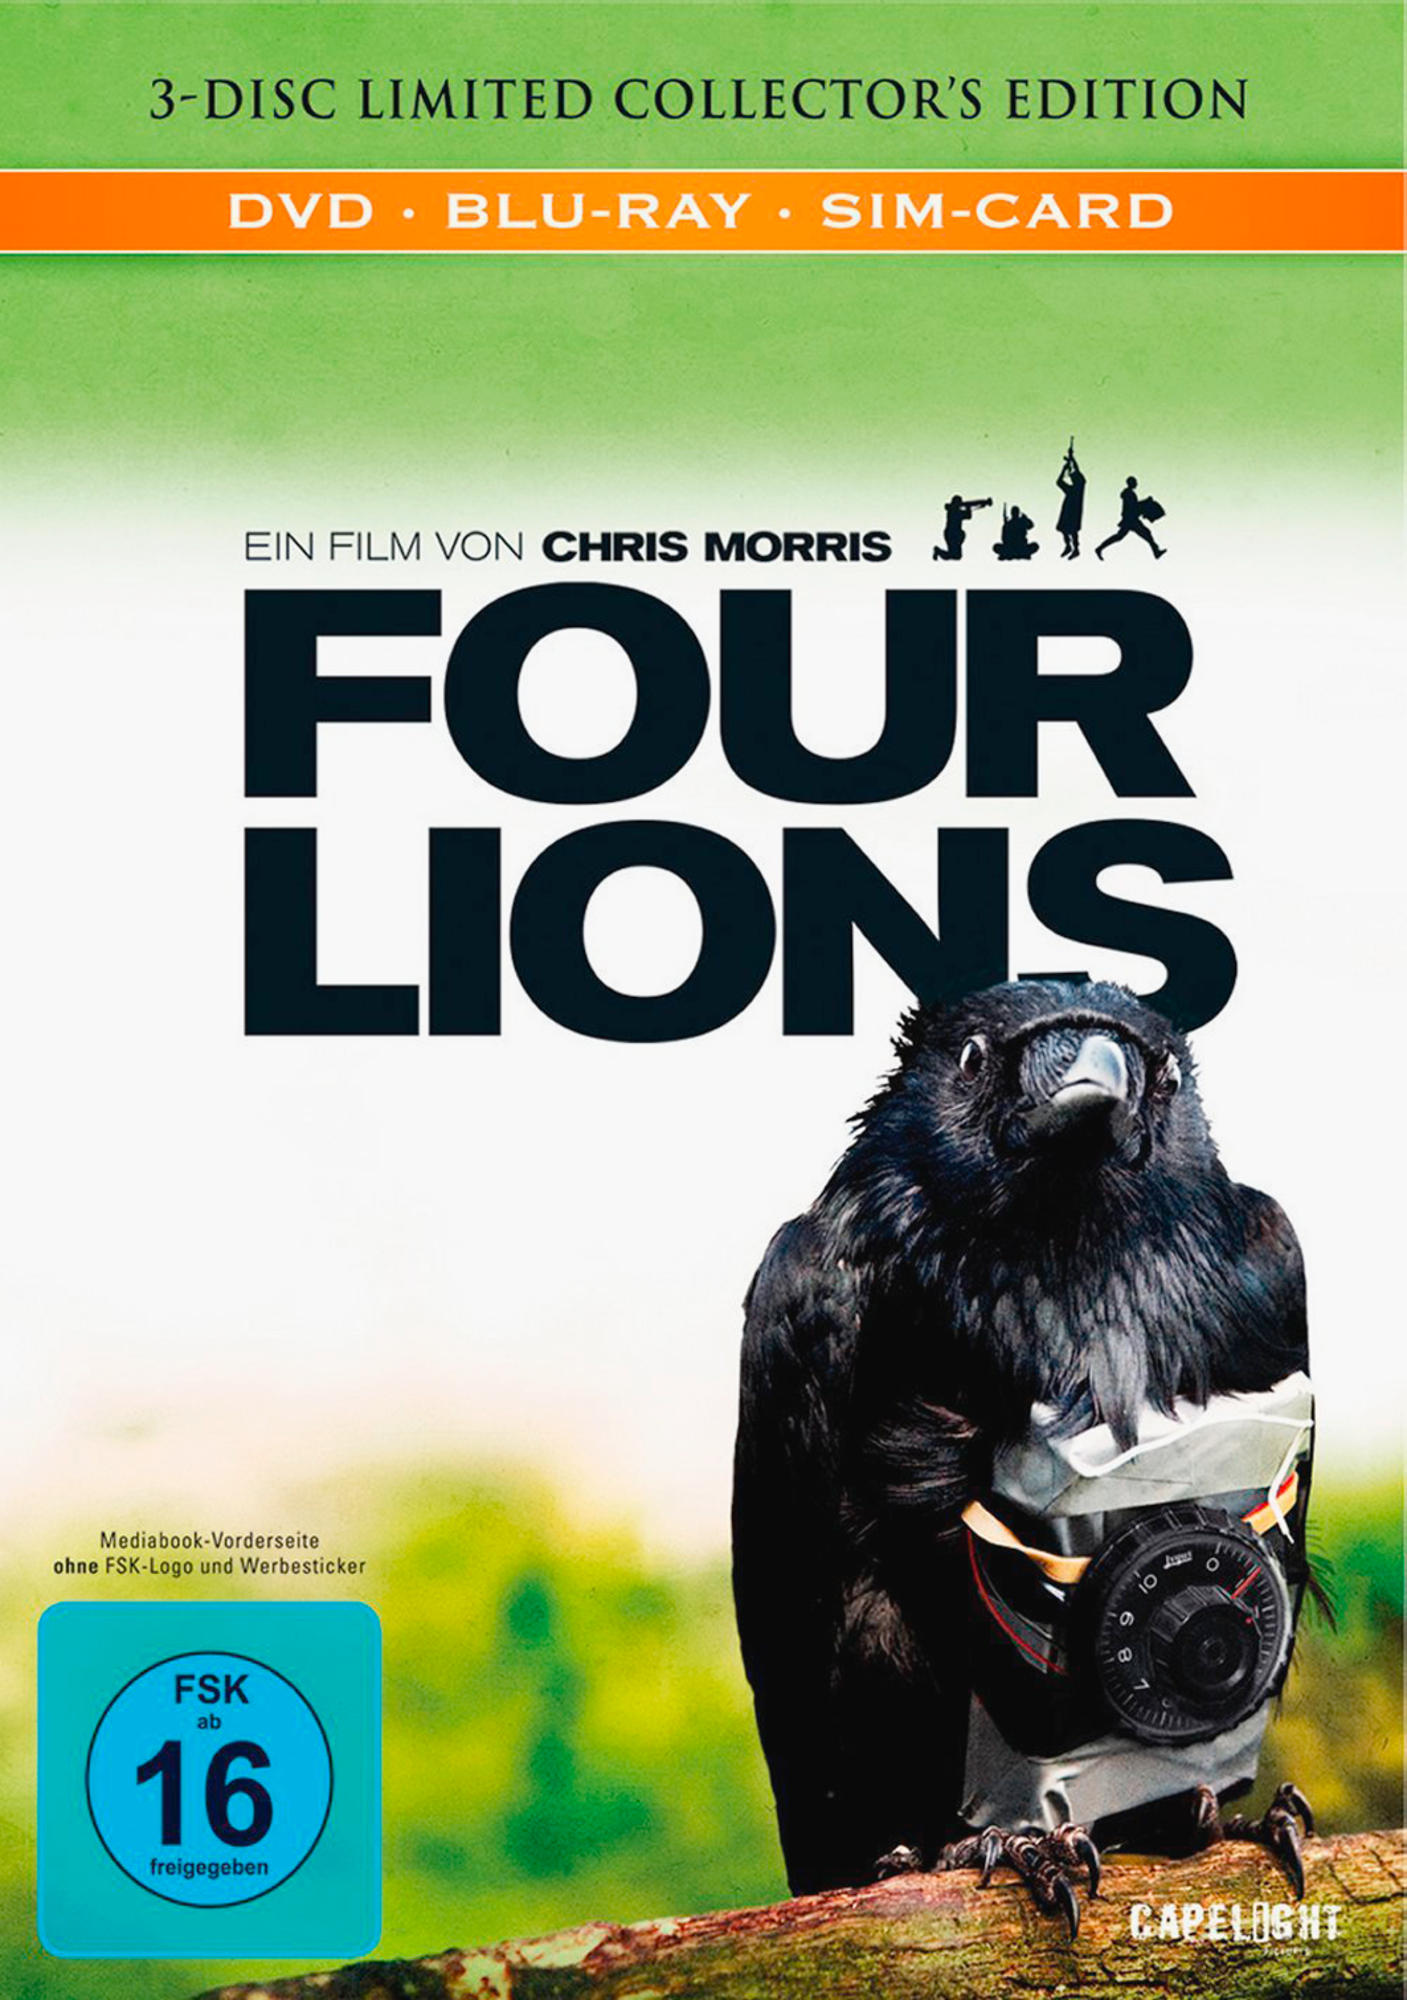 Four + Lions DVD Blu-ray